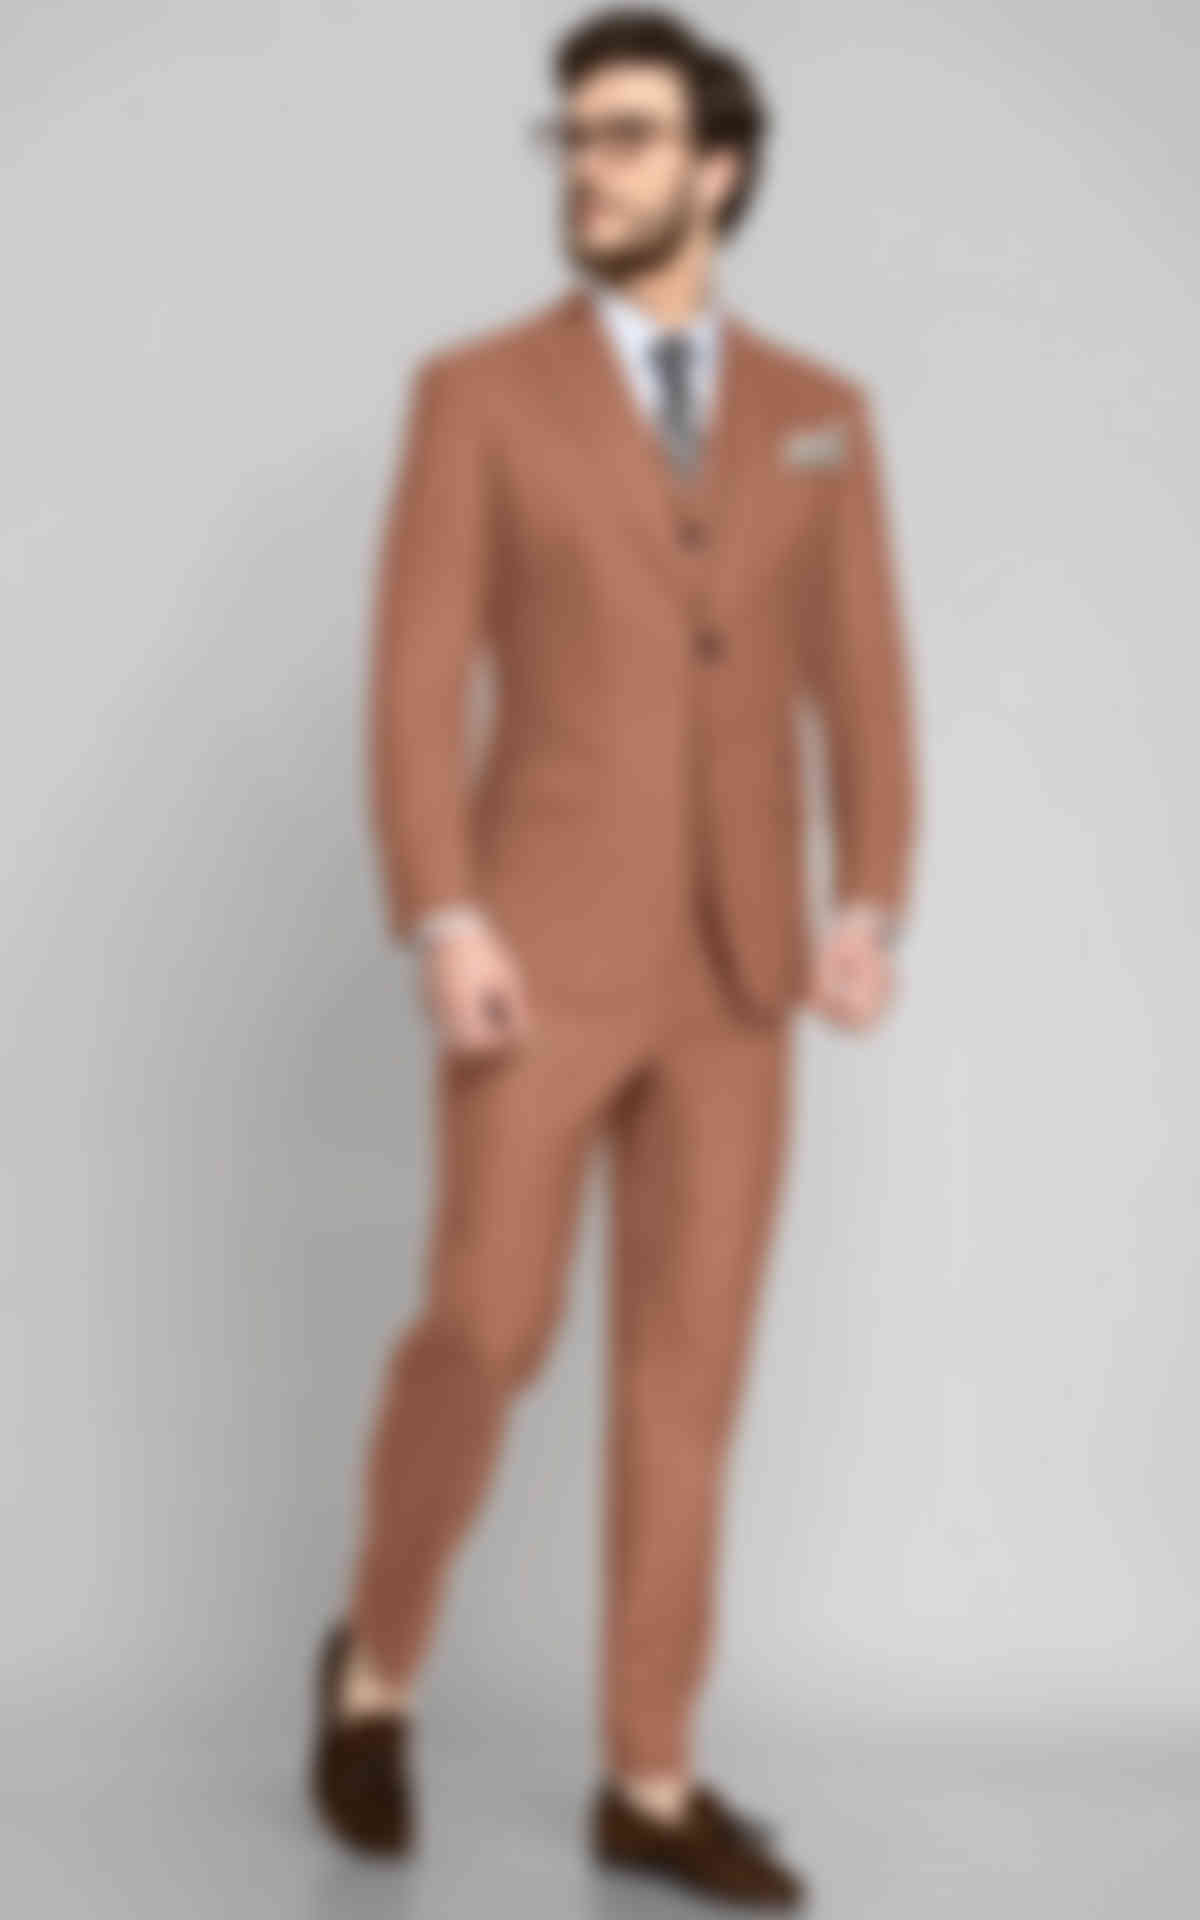 Sedona Pastel Rust Wool Suit